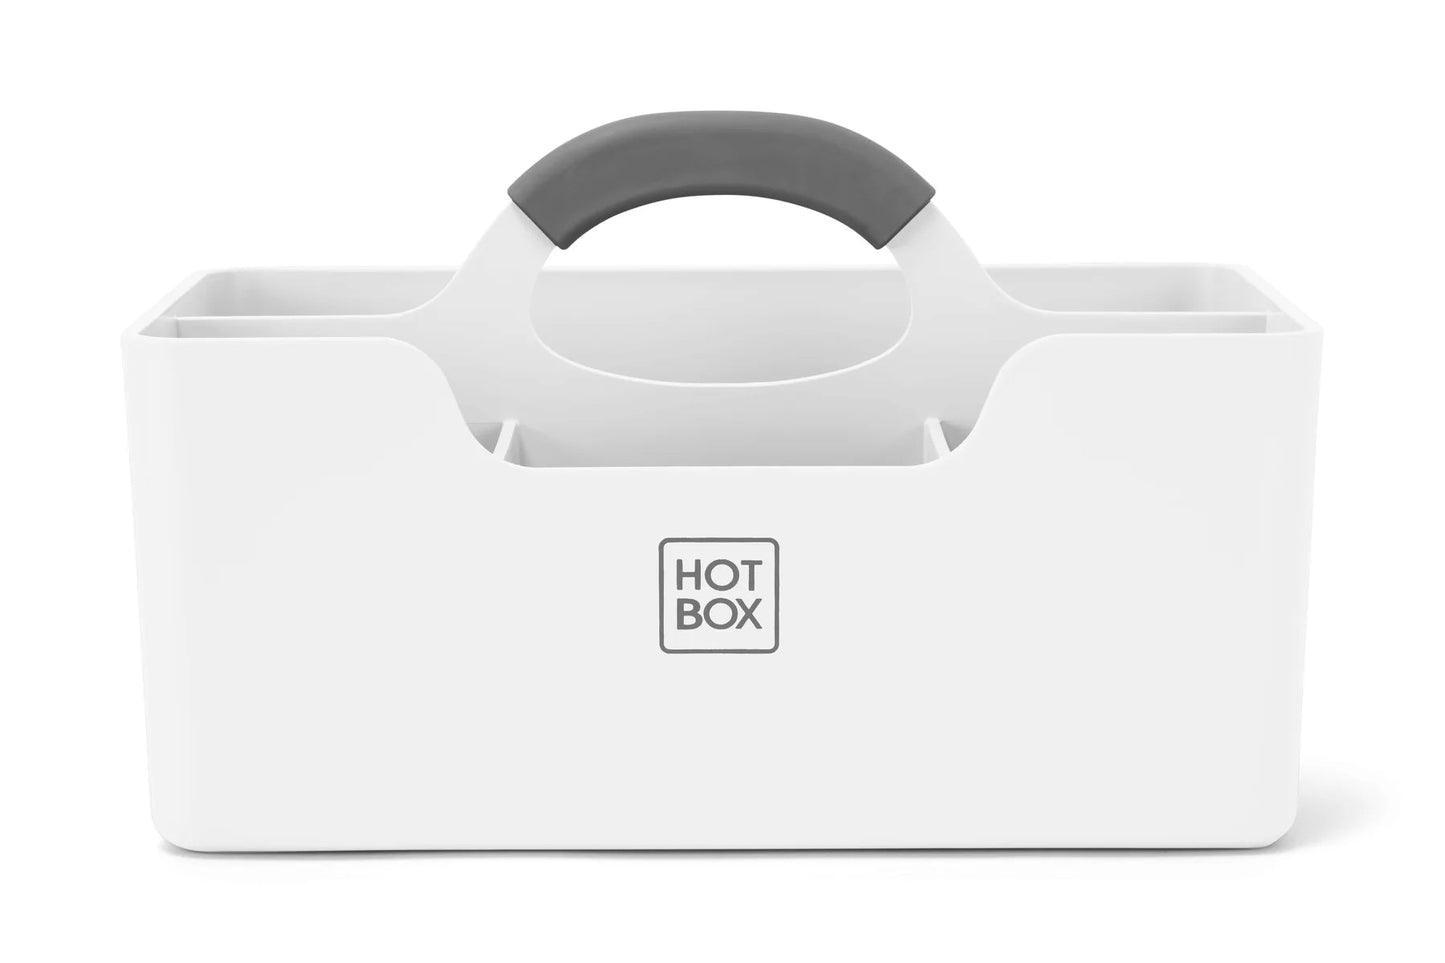 Hotbox 1 White - Kasedia.store